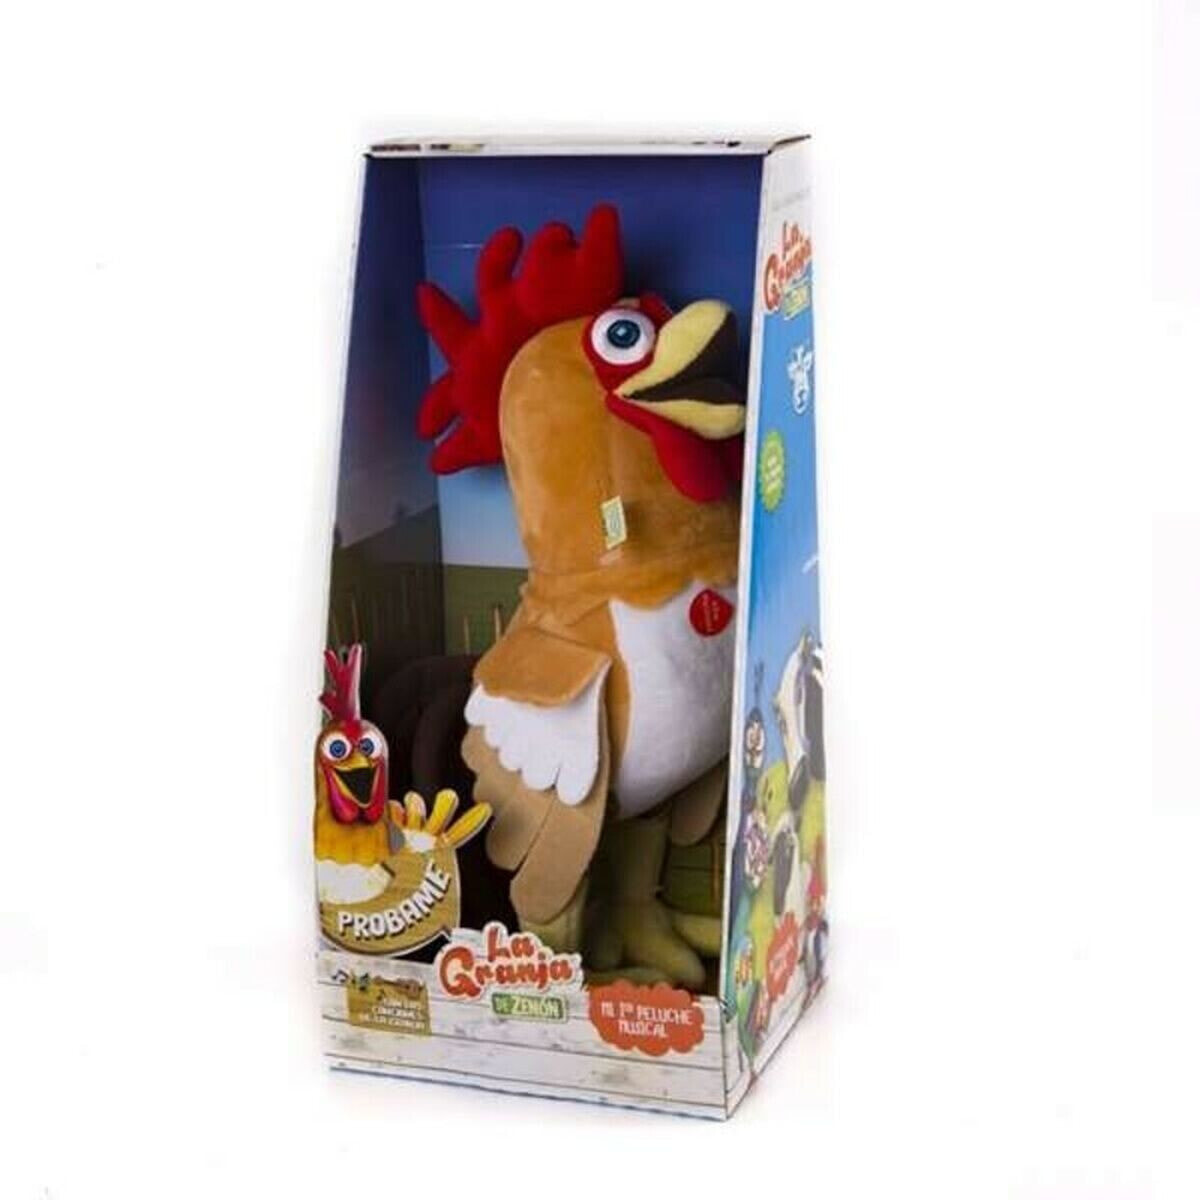 Плюшевая игрушка, издающая звуки Bandai 80004 13 x 17 x 34 cm (ES) (13 x 17 x 34 cm)